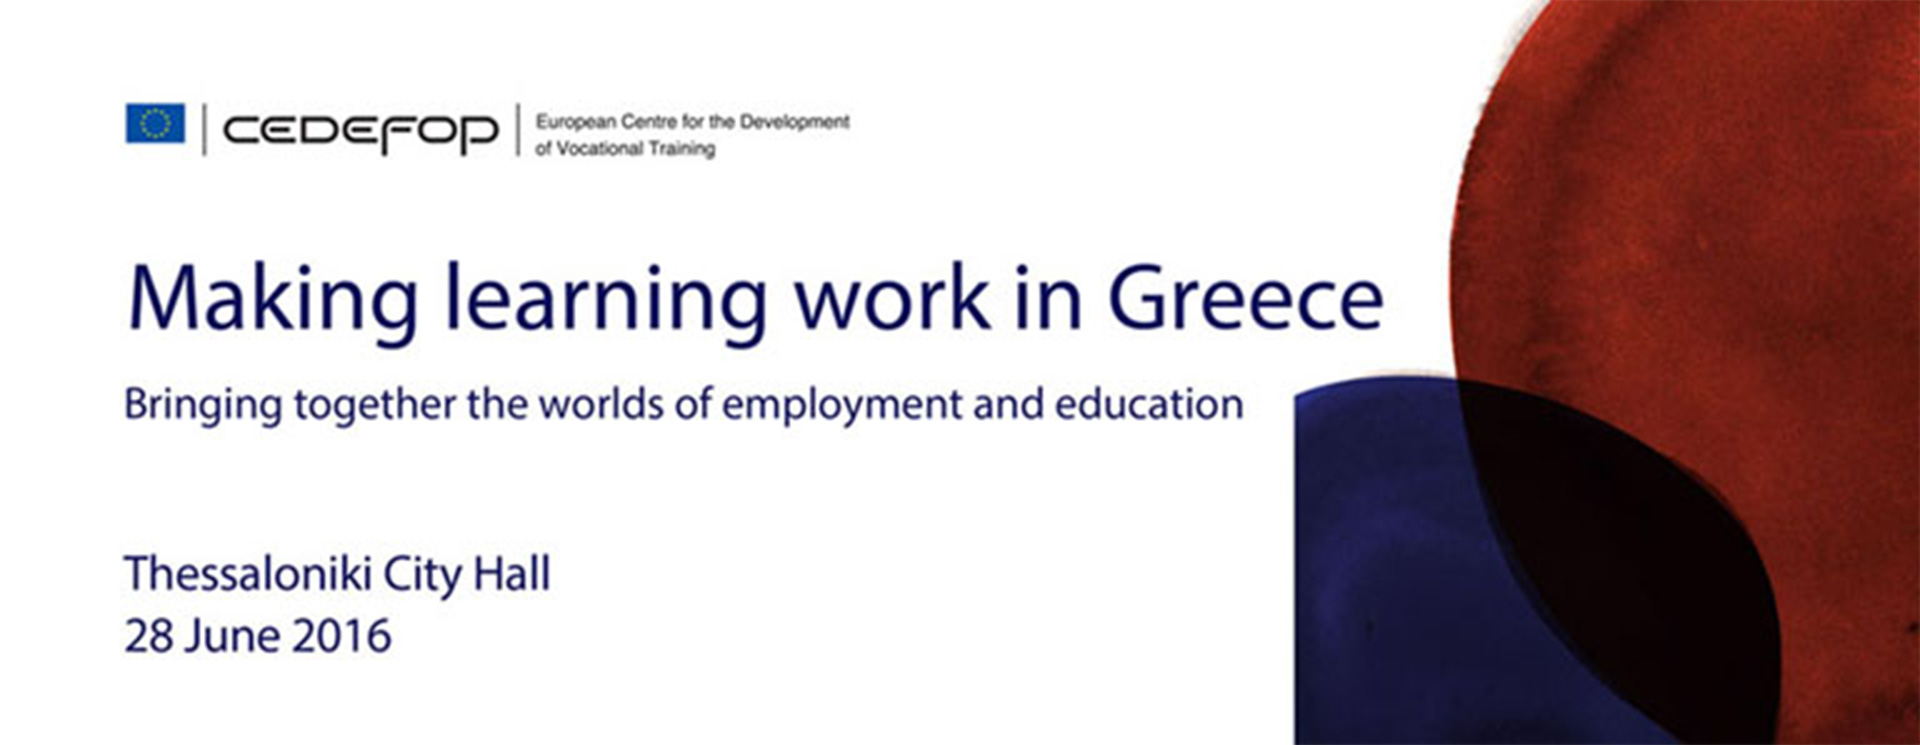 MAKING LEARNING WORK IN GREECE SEMINAR